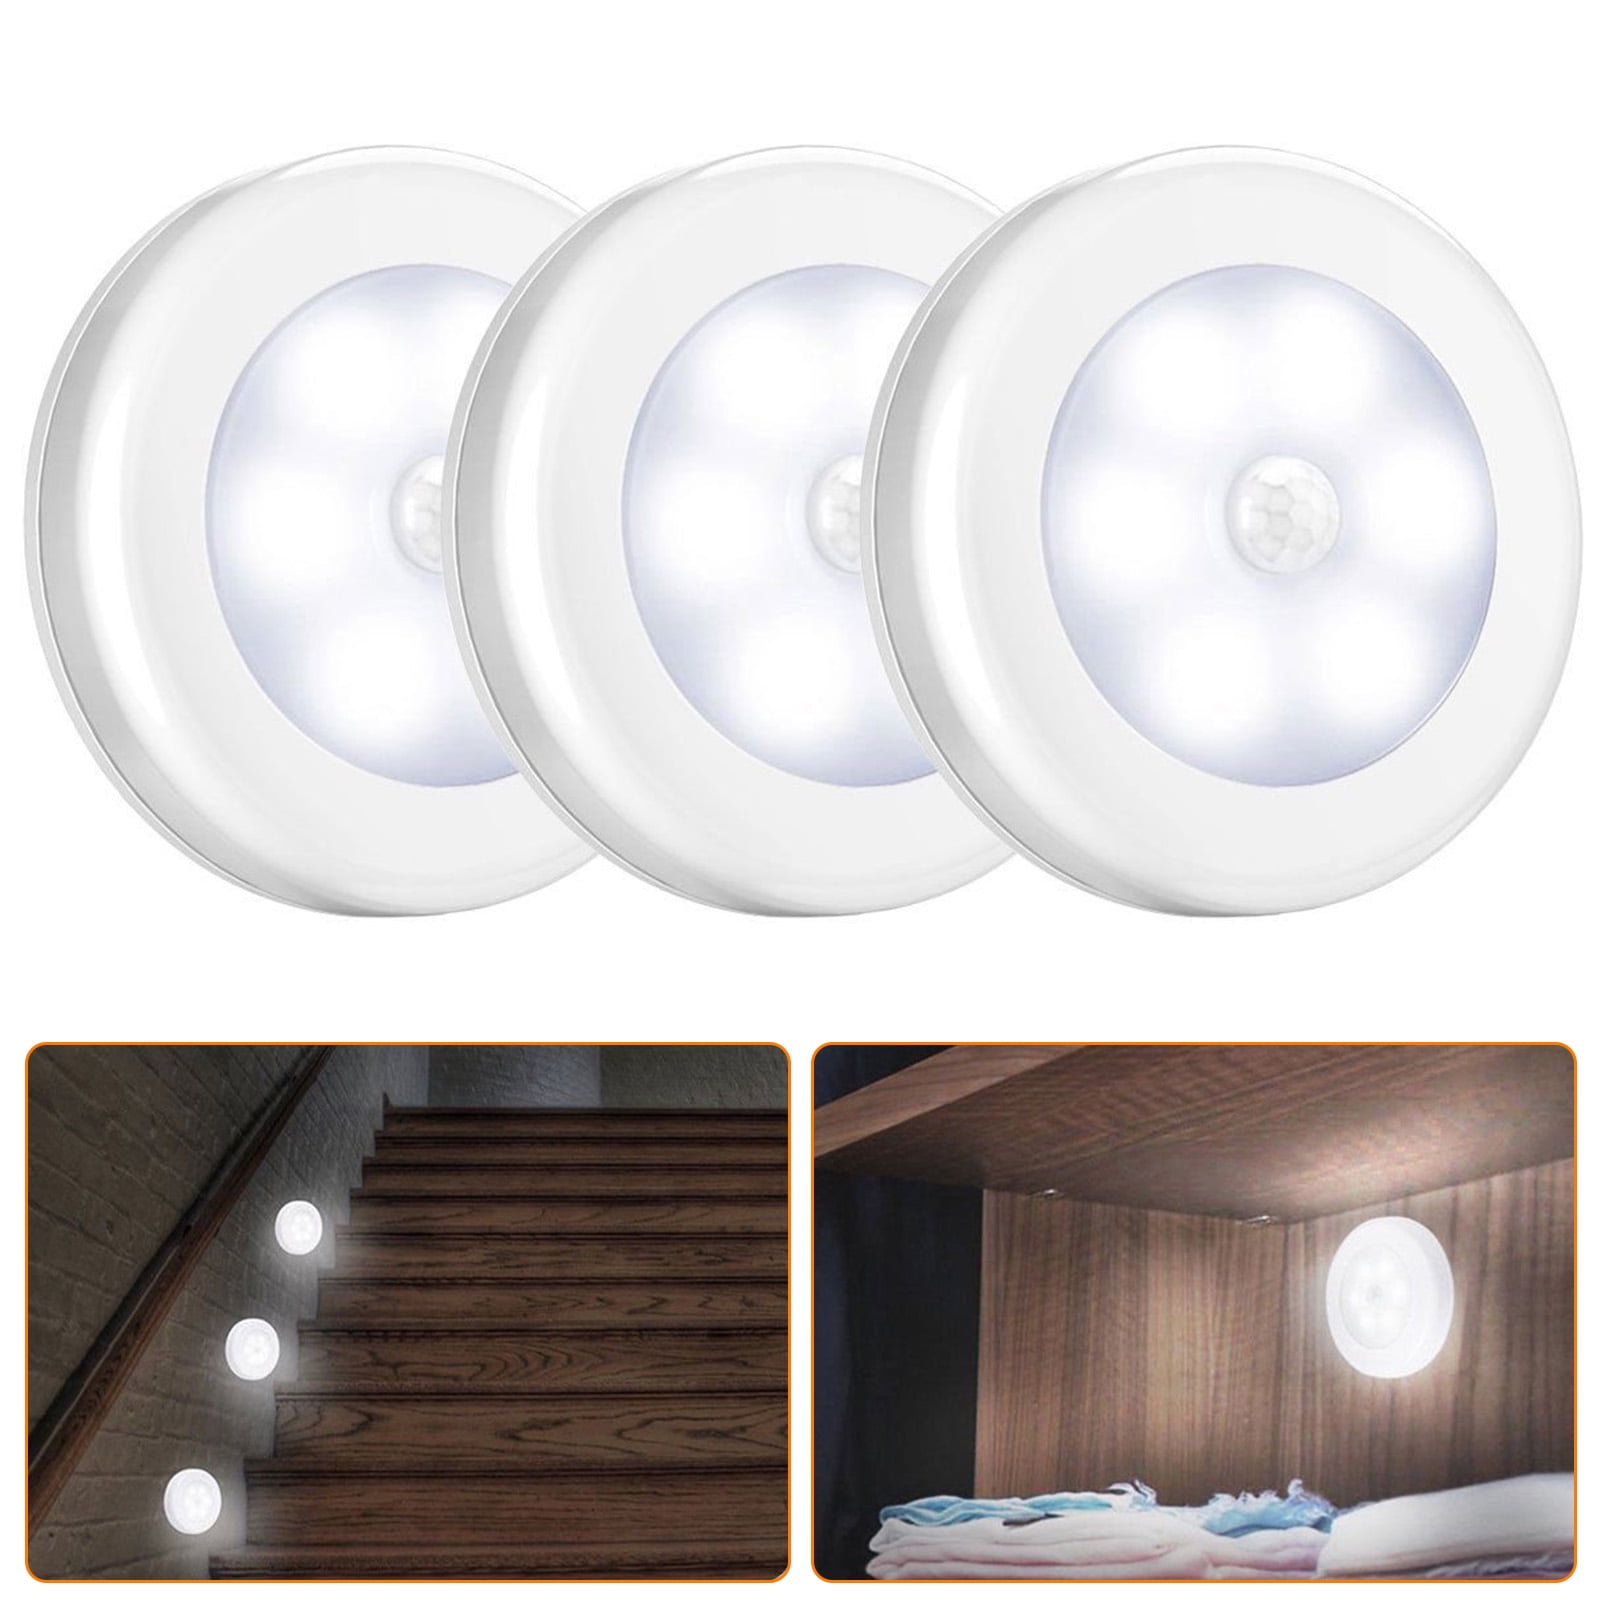 LED Wall Lamp Blue Stairs House Hallway Nursery Night Light Motion Detector 